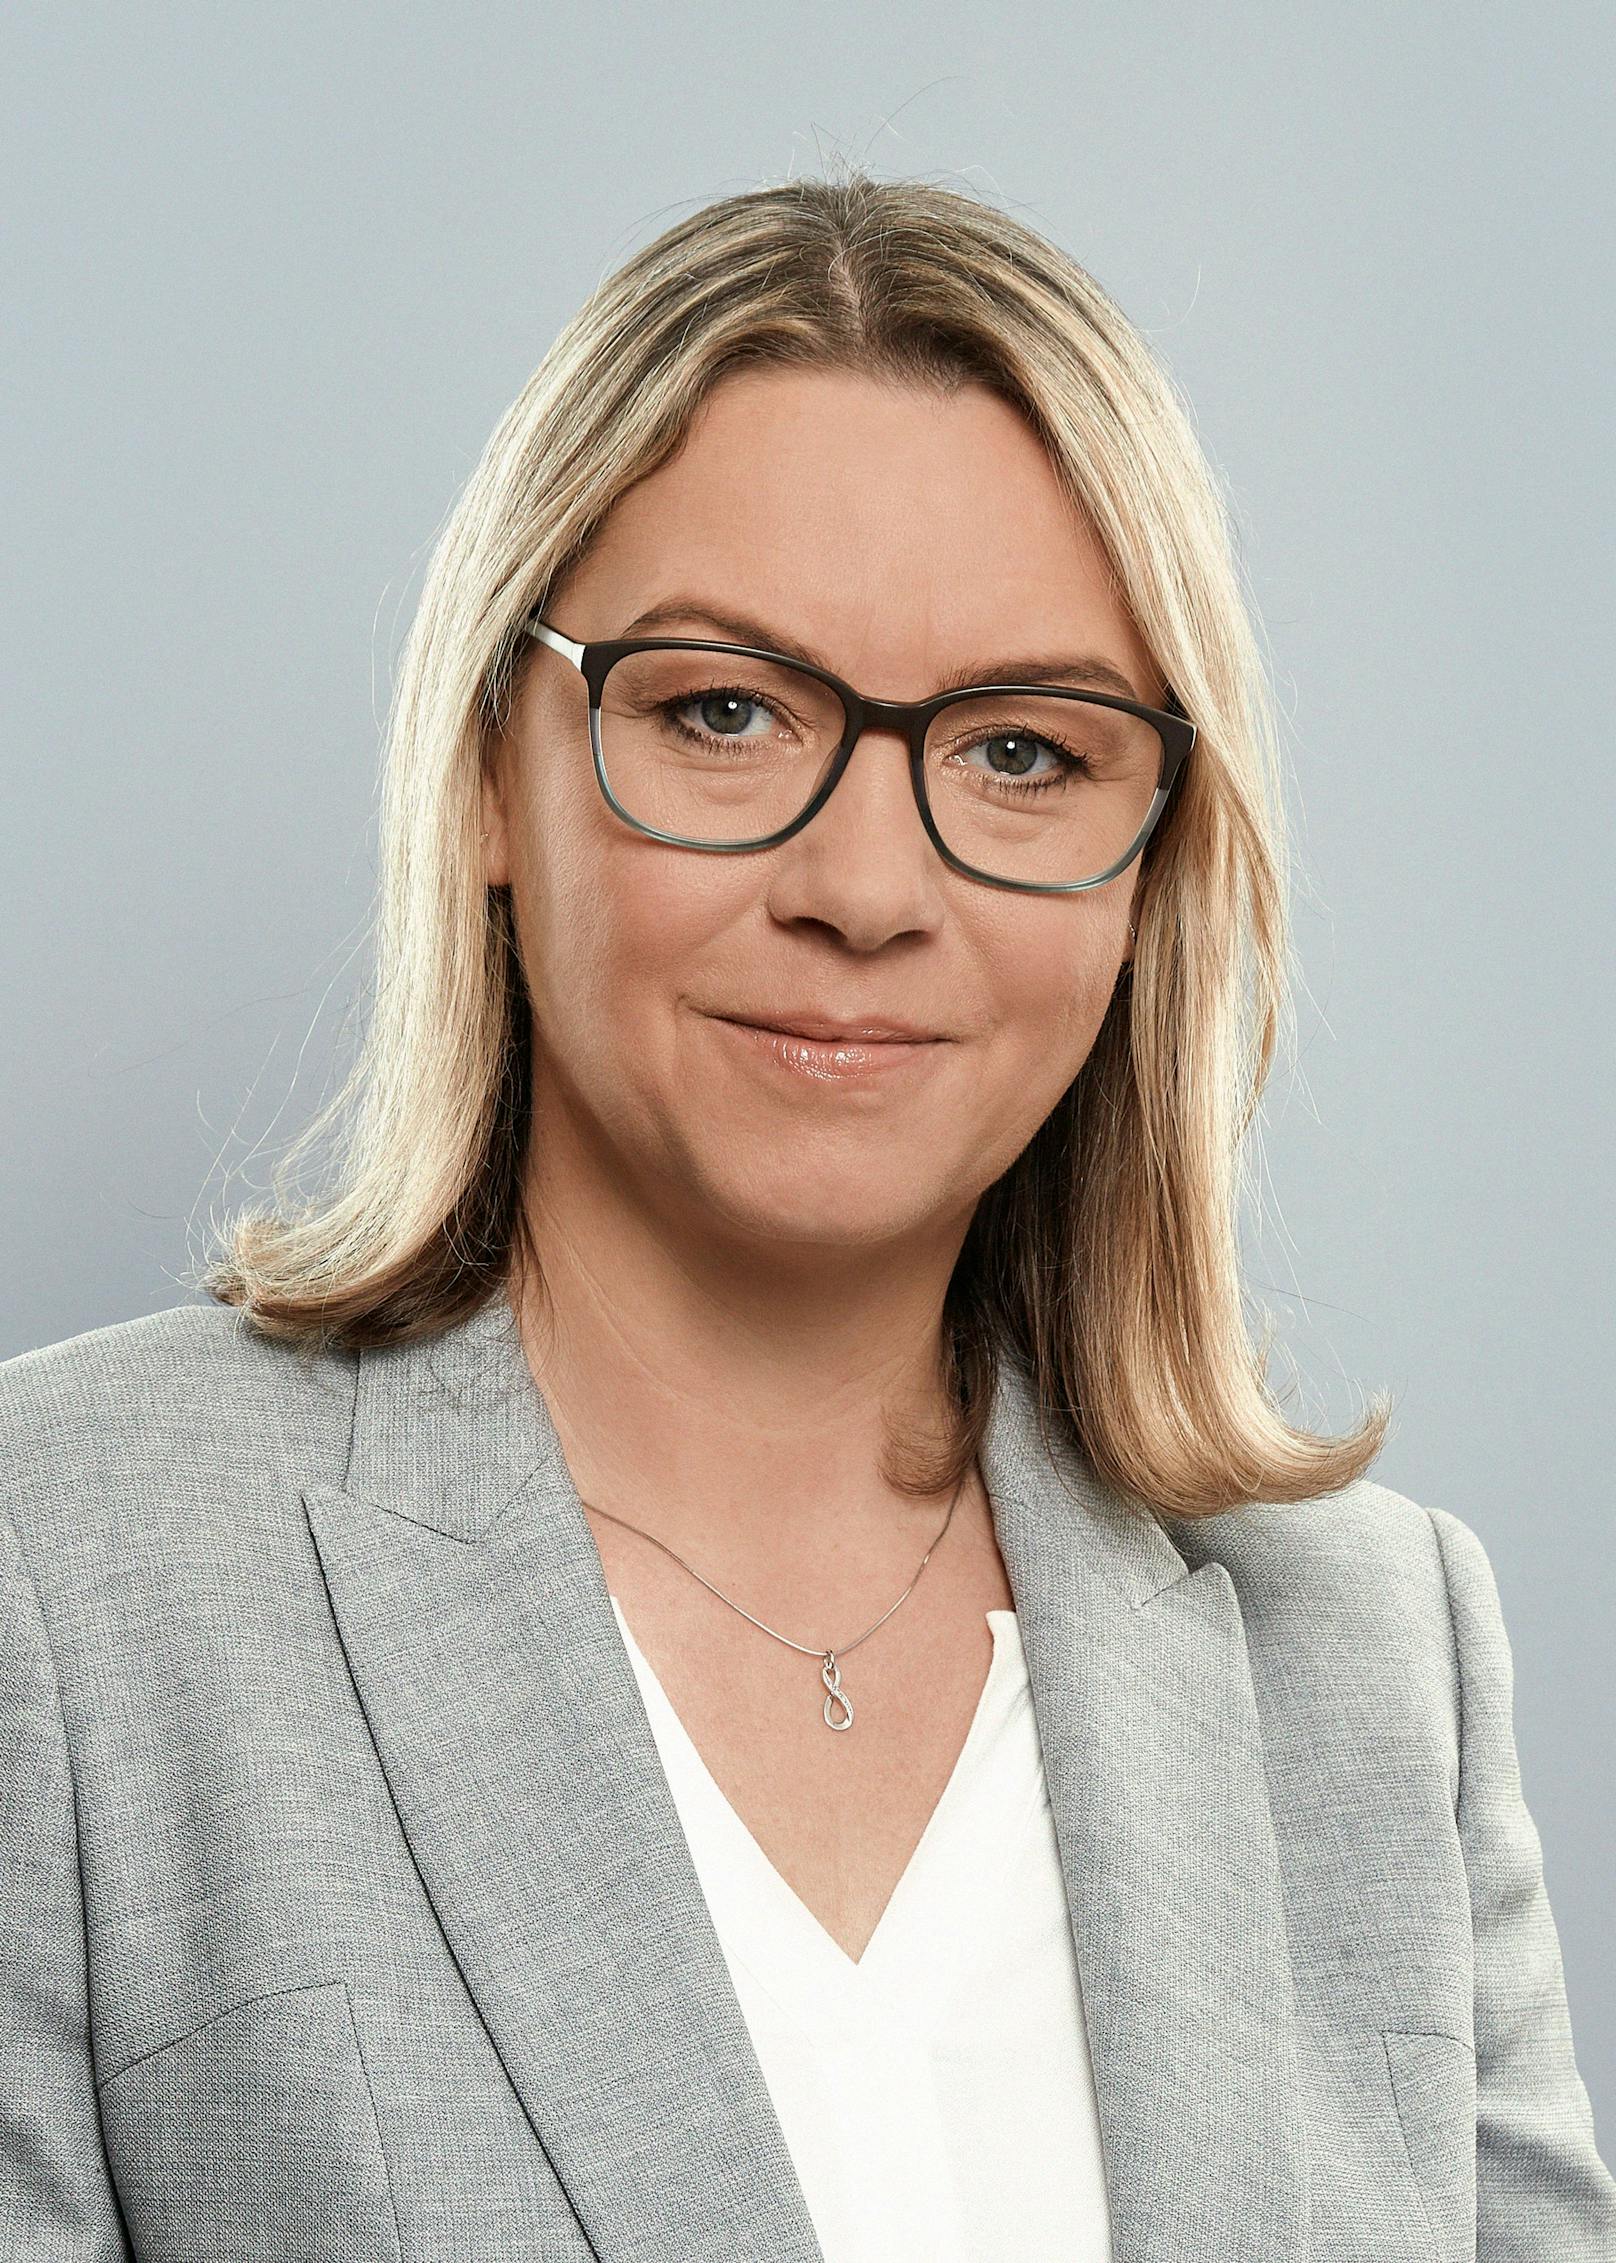 Konsumentenschützerin Ulrike Weiß